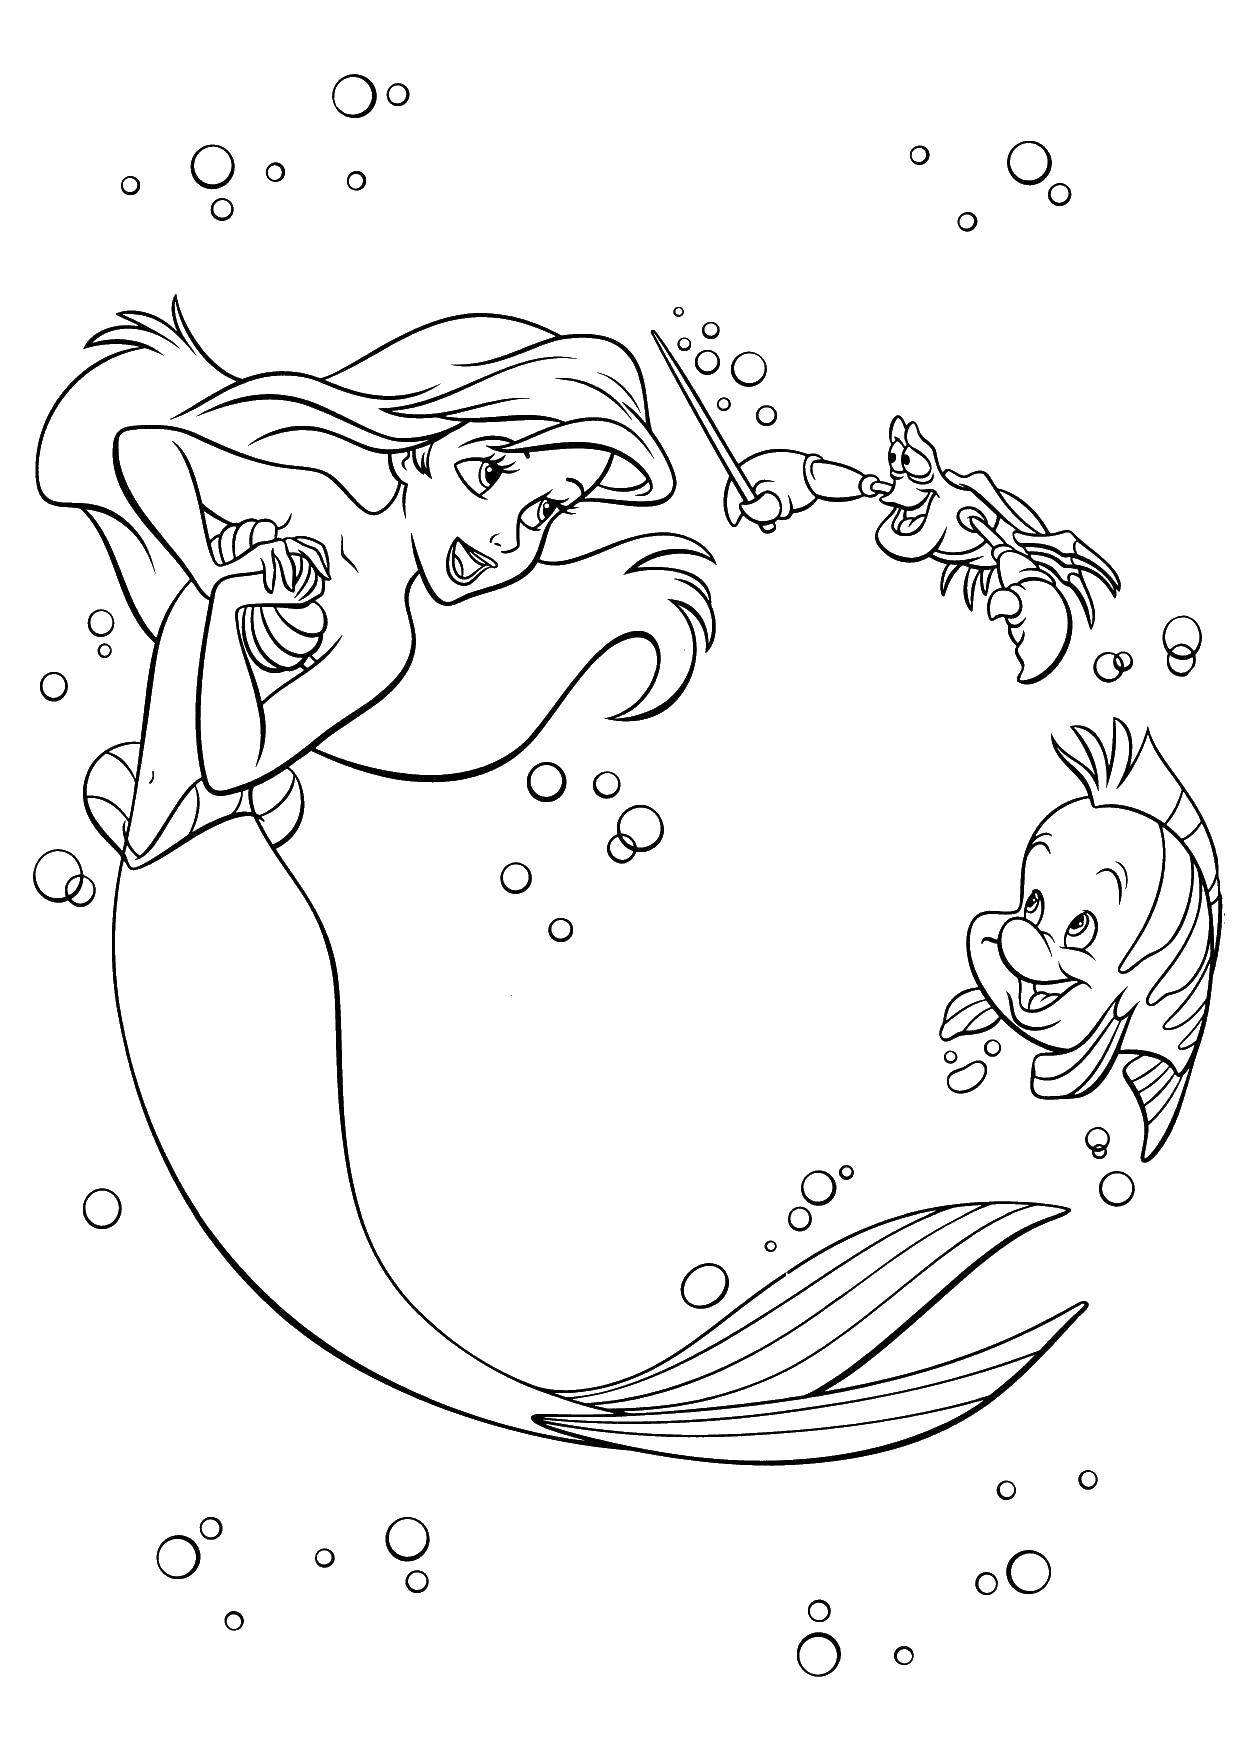 Название: Раскраска Ариэль, краб и рыбка. Категория: Принцессы. Теги: принцессы, Ариэль, русалочка.